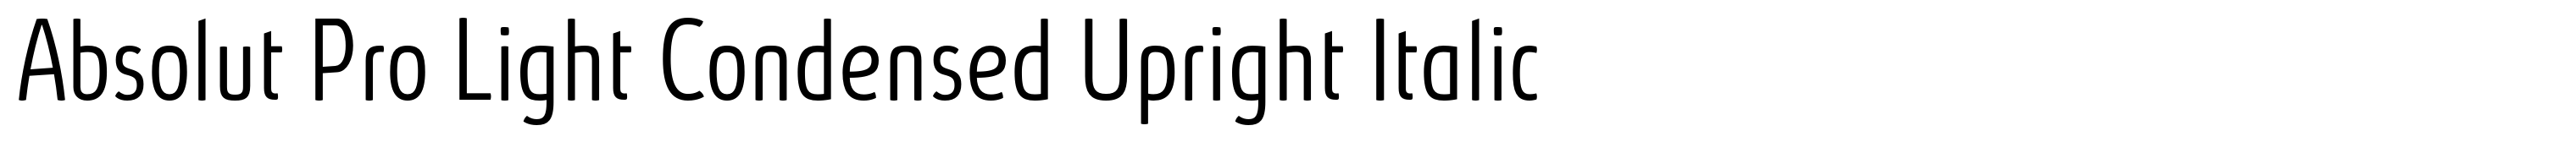 Absolut Pro Light Condensed Upright Italic